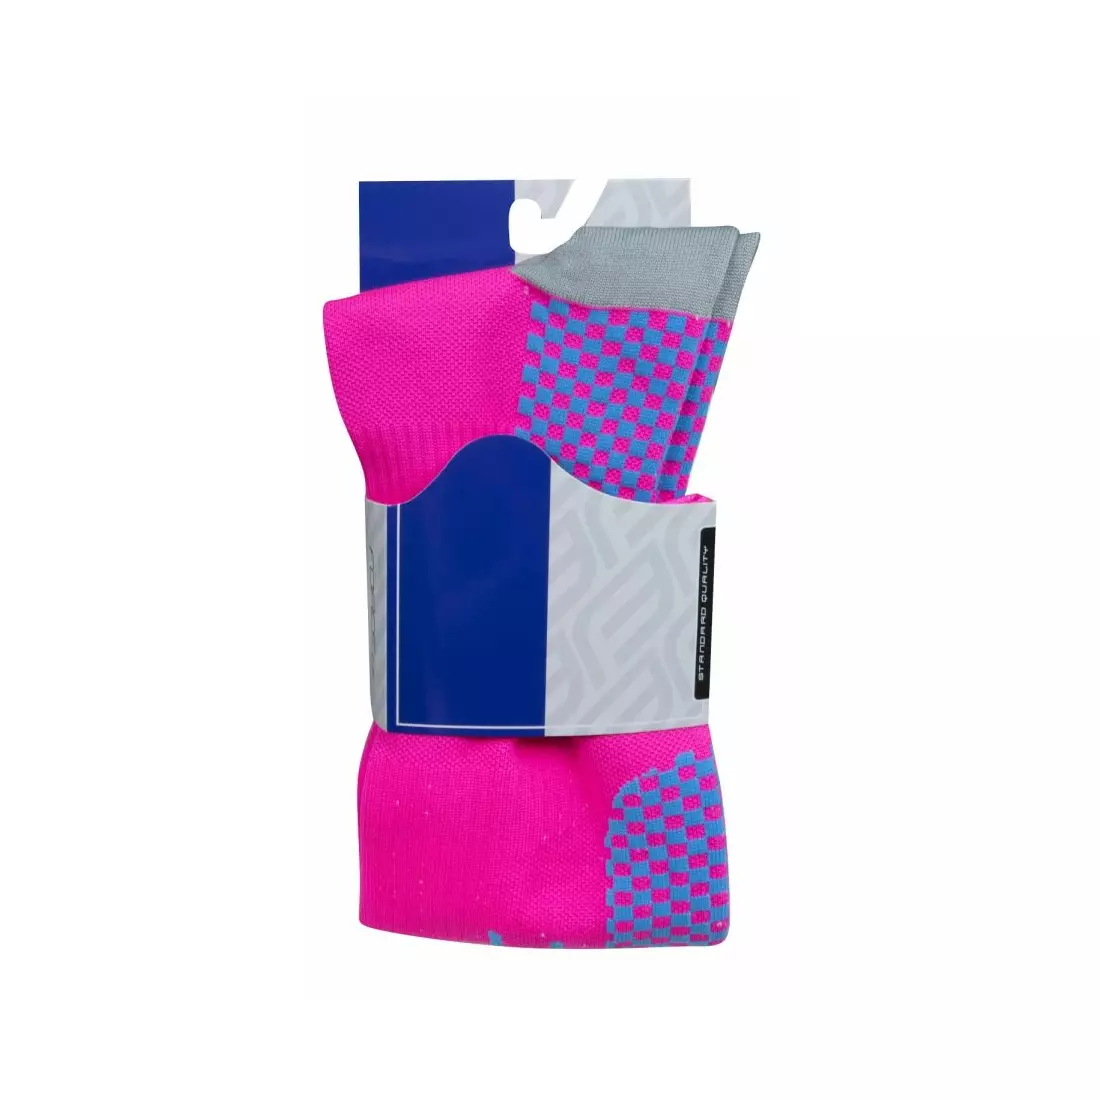 FORCE TESSERA COMPRESSION compression socks, pink-purple